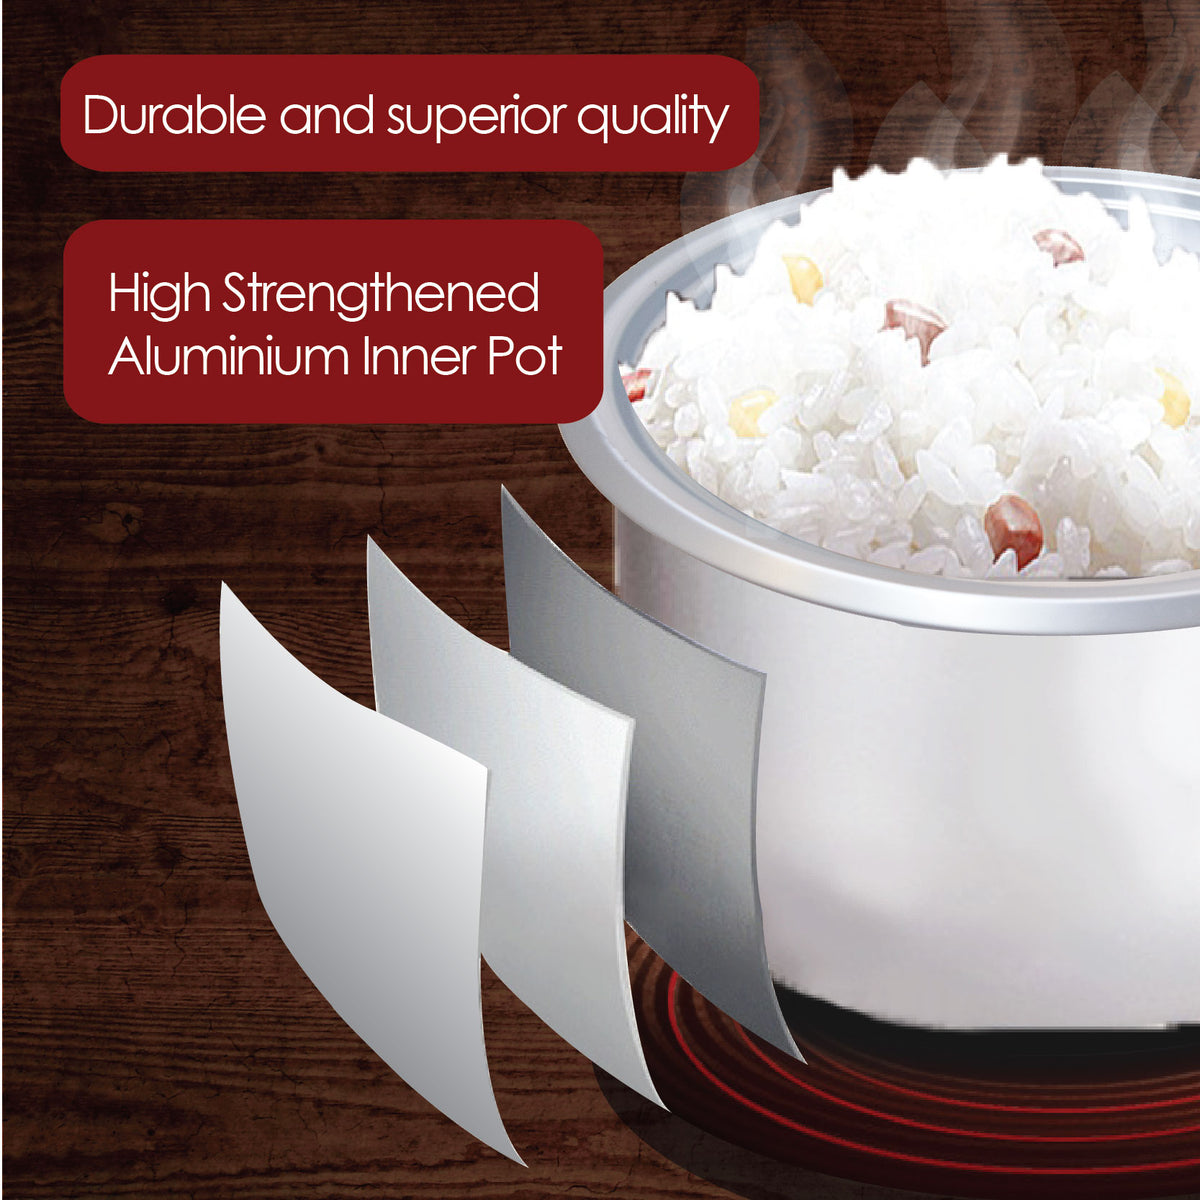 0.6L Rice Cooker with Aluminium inner pot  (PPRC2)